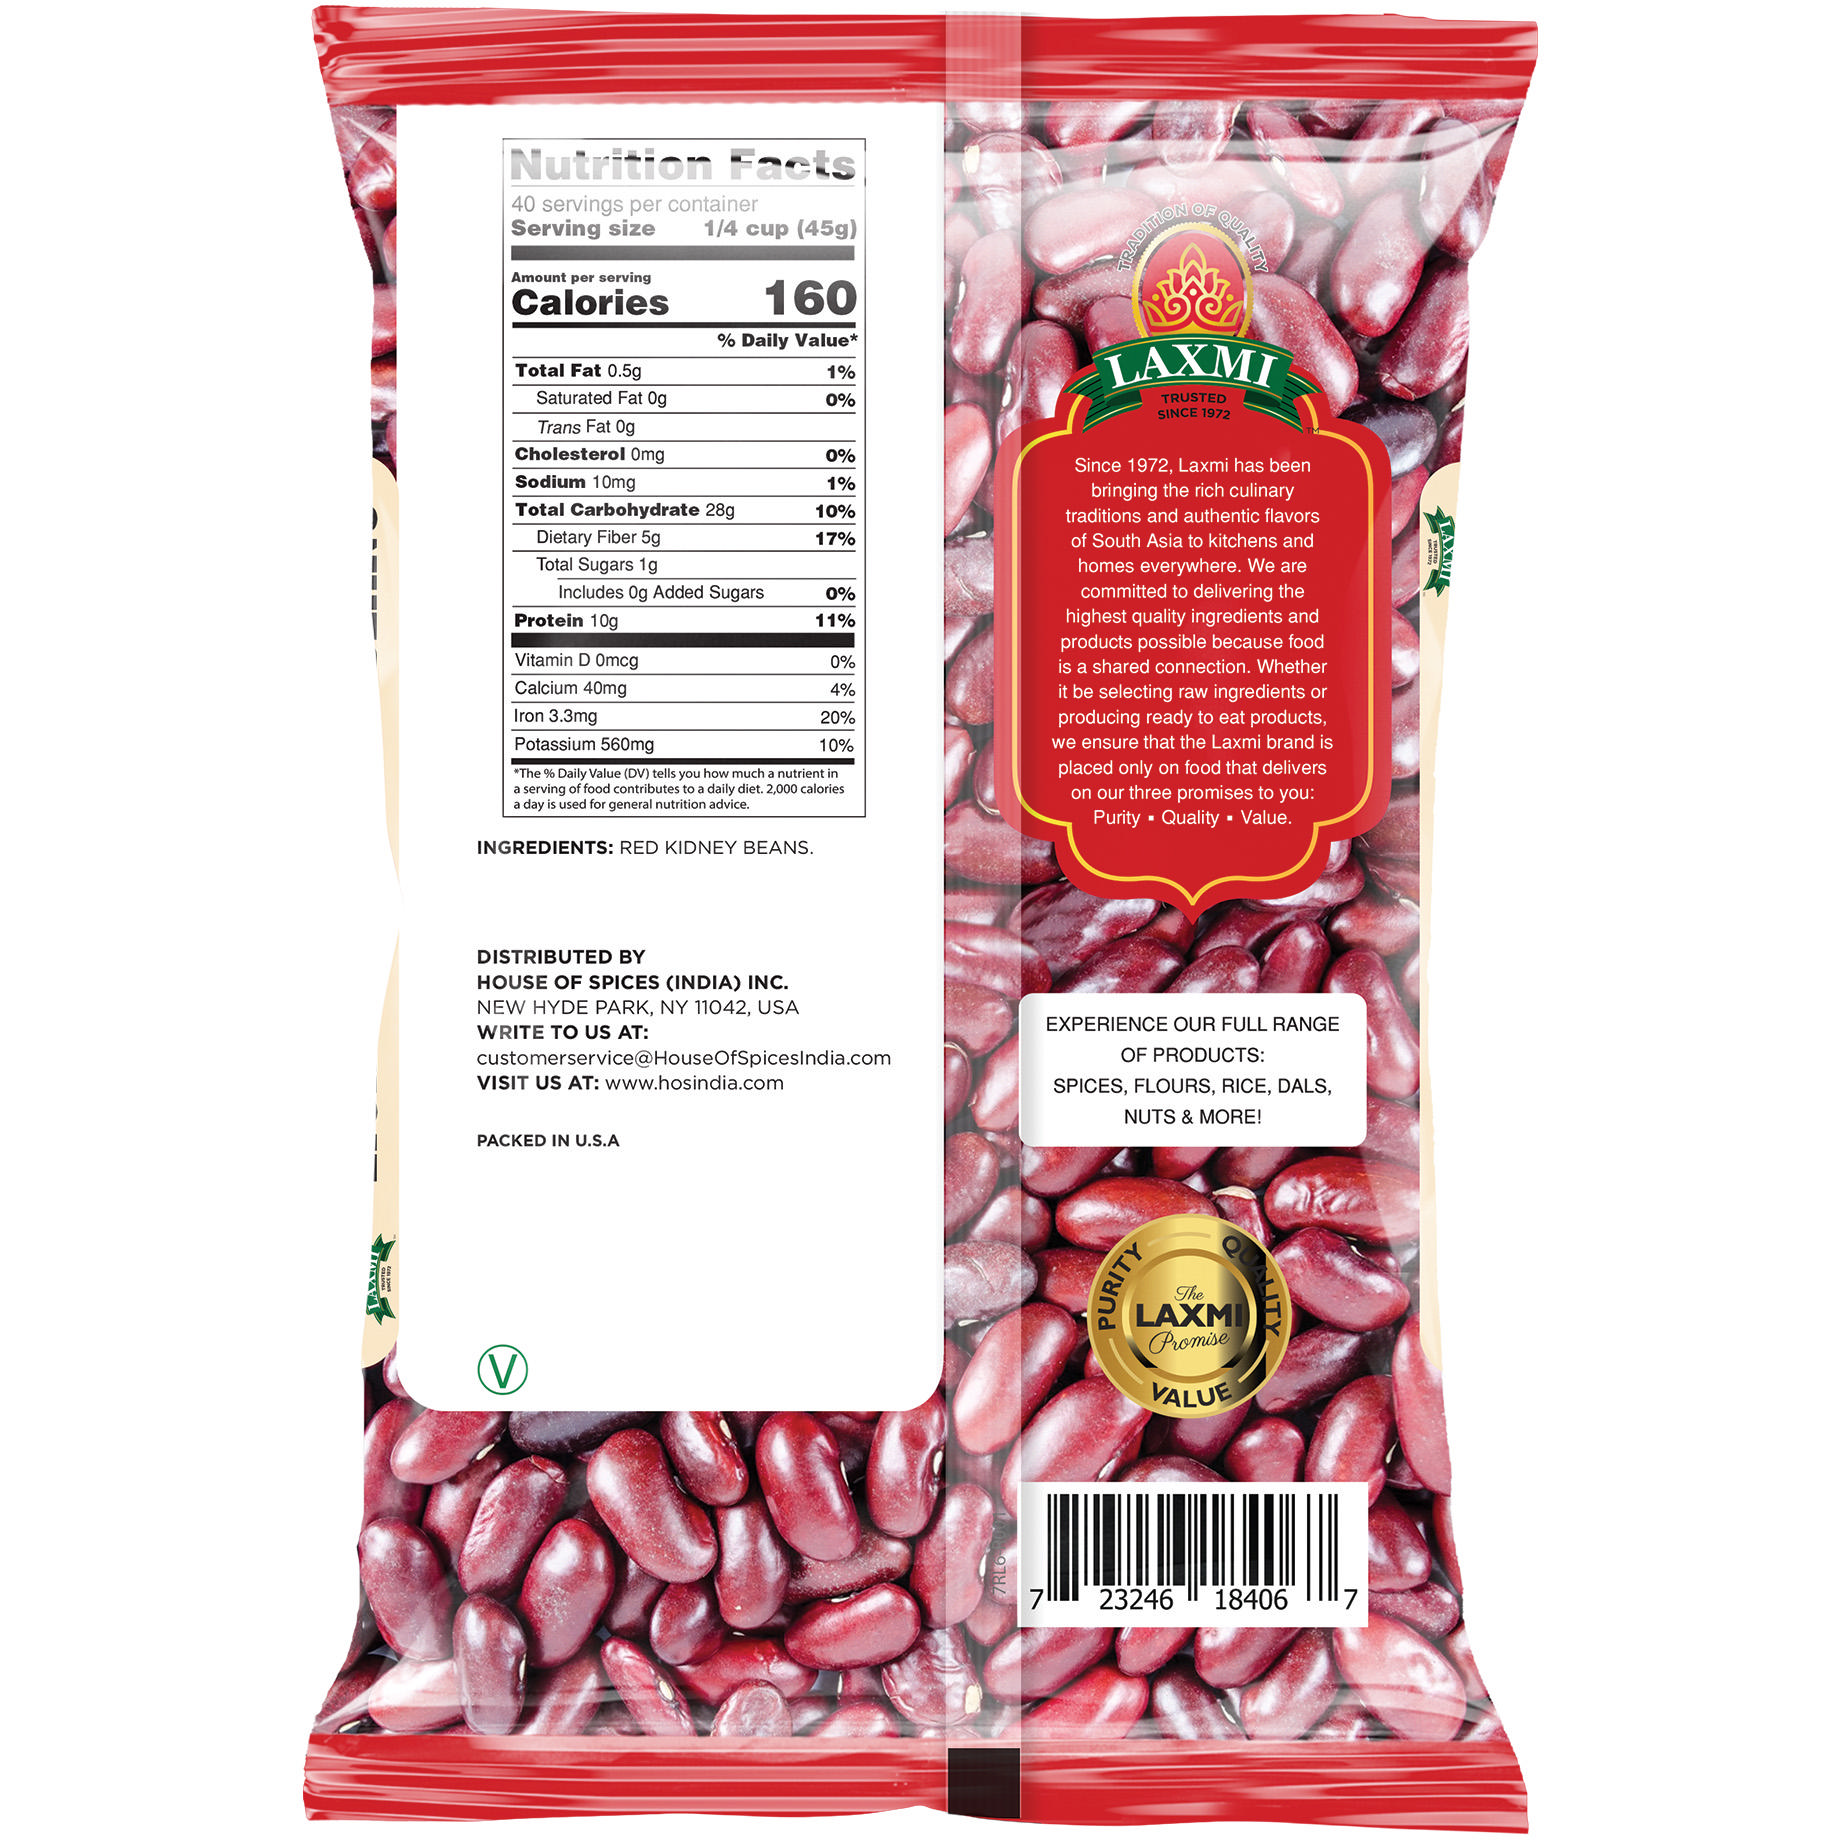 Laxmi Rajma Red Kidney Beans Light - 4 Lb (1.81 Kg)